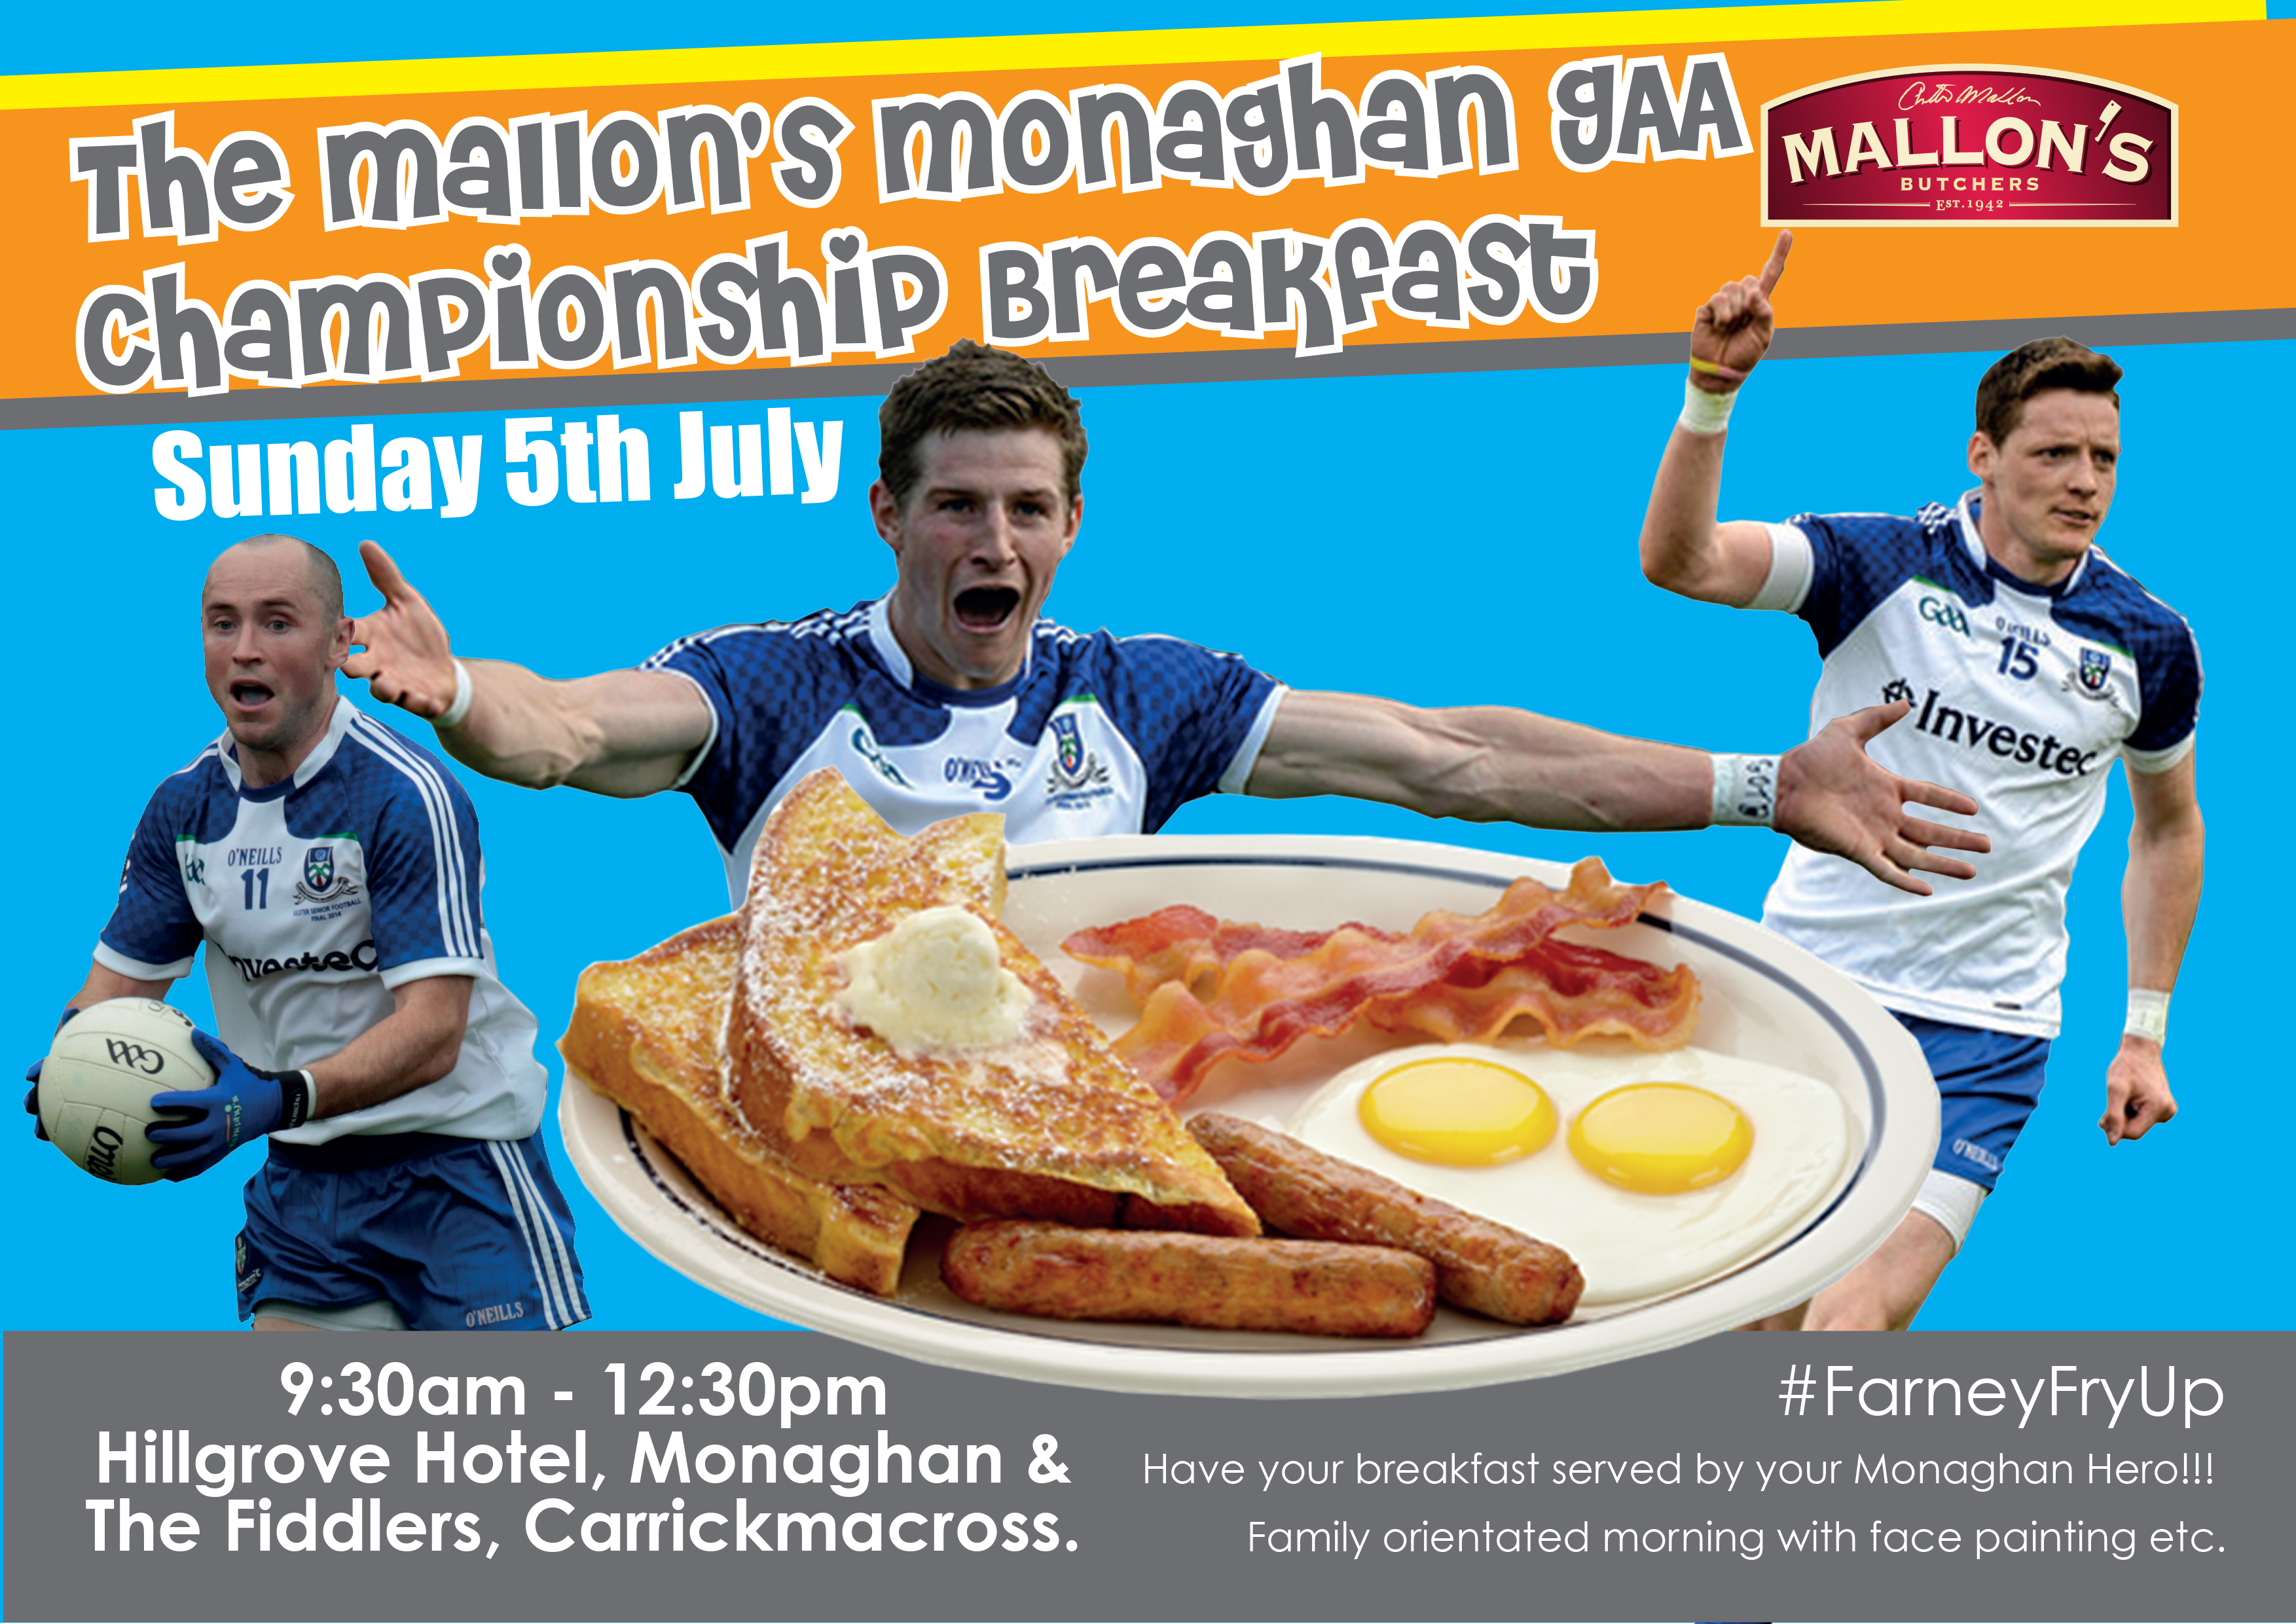 The Mallon’s Monaghan GAA Championship Breakfast